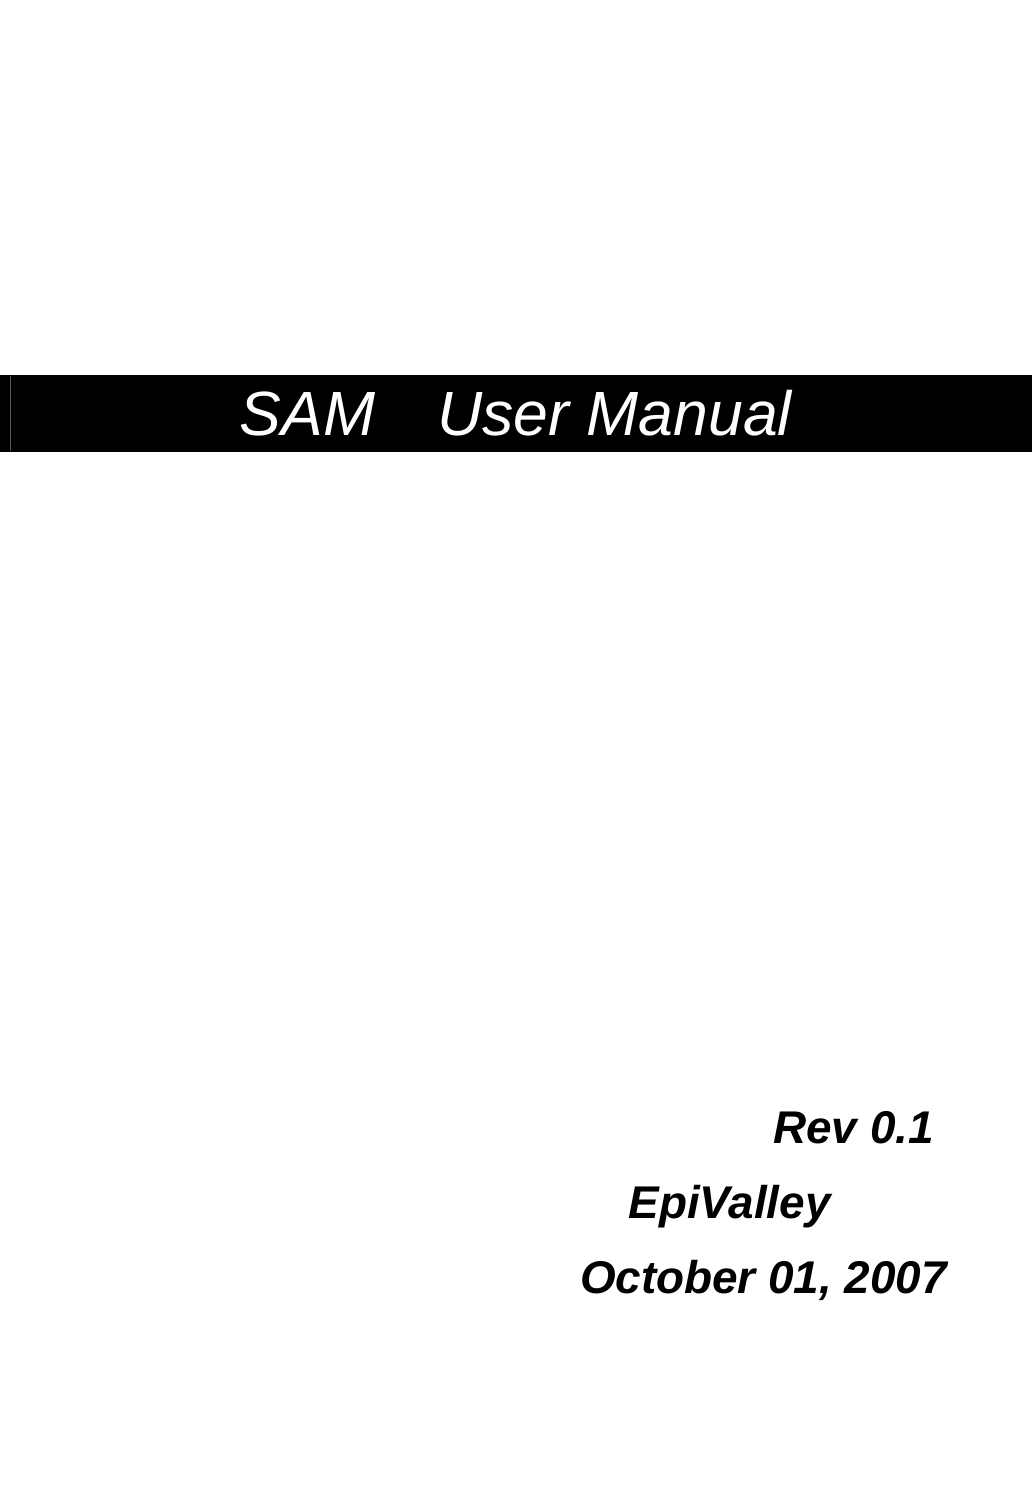                    SAM  User Manual                                                Rev 0.1                    EpiValley                       October 01, 2007      